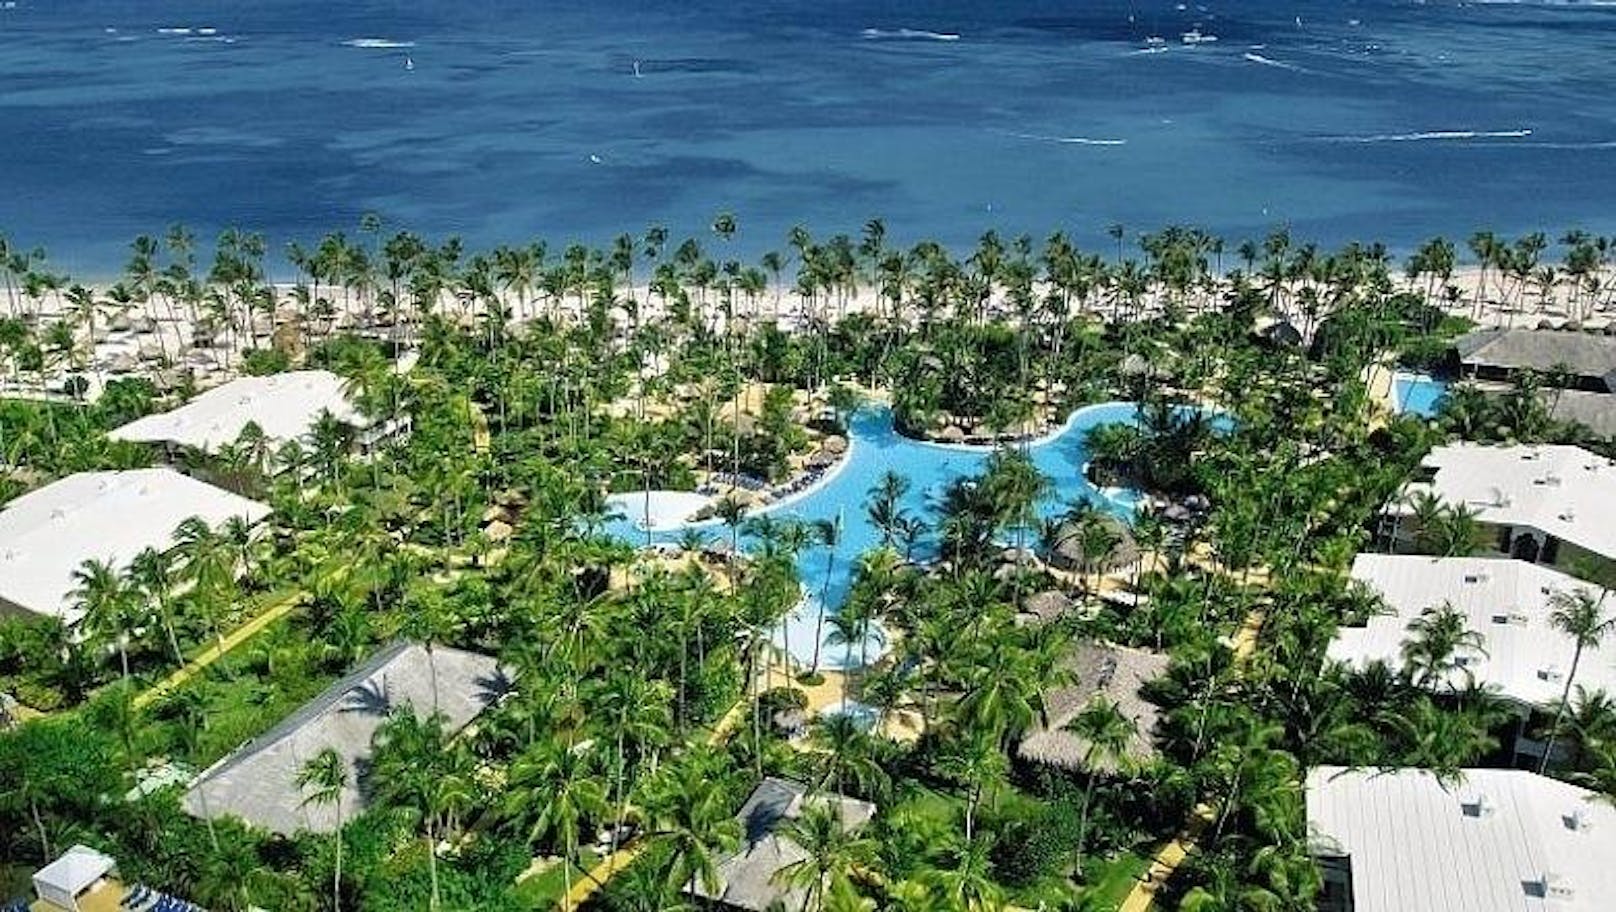 Dominikanische Republik: Das Hotel Melia Caribe Tropical liegt direkt am weißen Sandstrand der Playa Bávaro. <a href="http://buchen.allesreise.at/?pagetype=reise&select=PO_2|ON_Y|BE_2,0,2|RA_13|RE_2177|KA_30%3E|AU_7:14|PR_150:5000|DE_2017-11-1%3E|RT_2018-3-31%3C|AB_VIE|VA_15&portal=2">Hier geht's zum Angebot!</a>